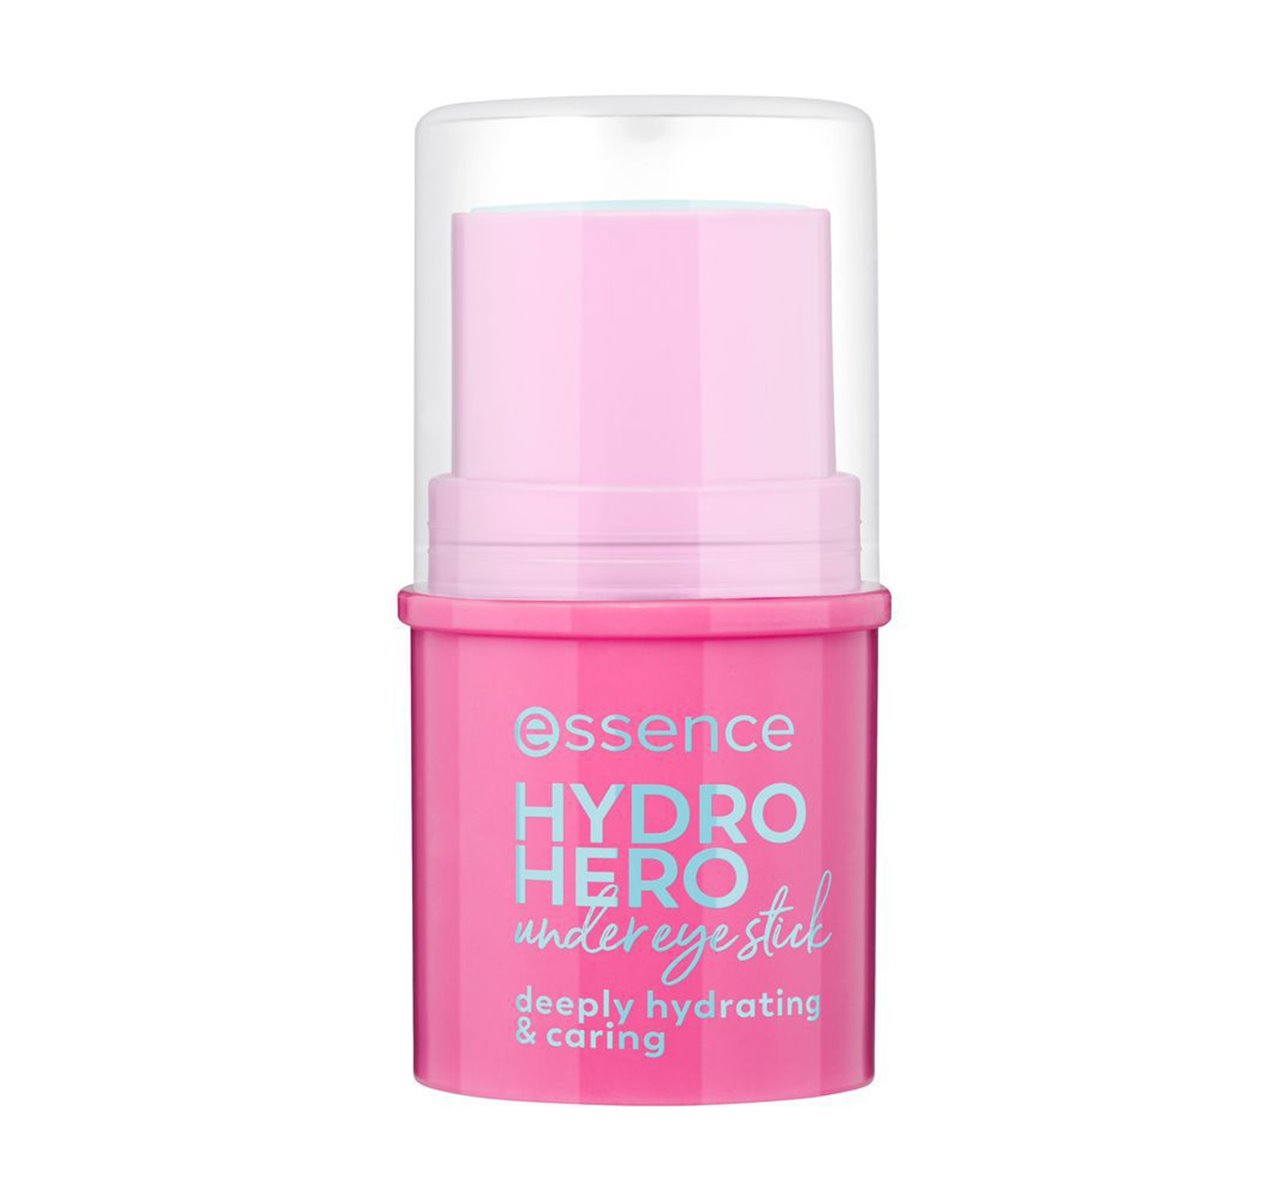 essence Hydro Hero Under Eye Stick 4,5g